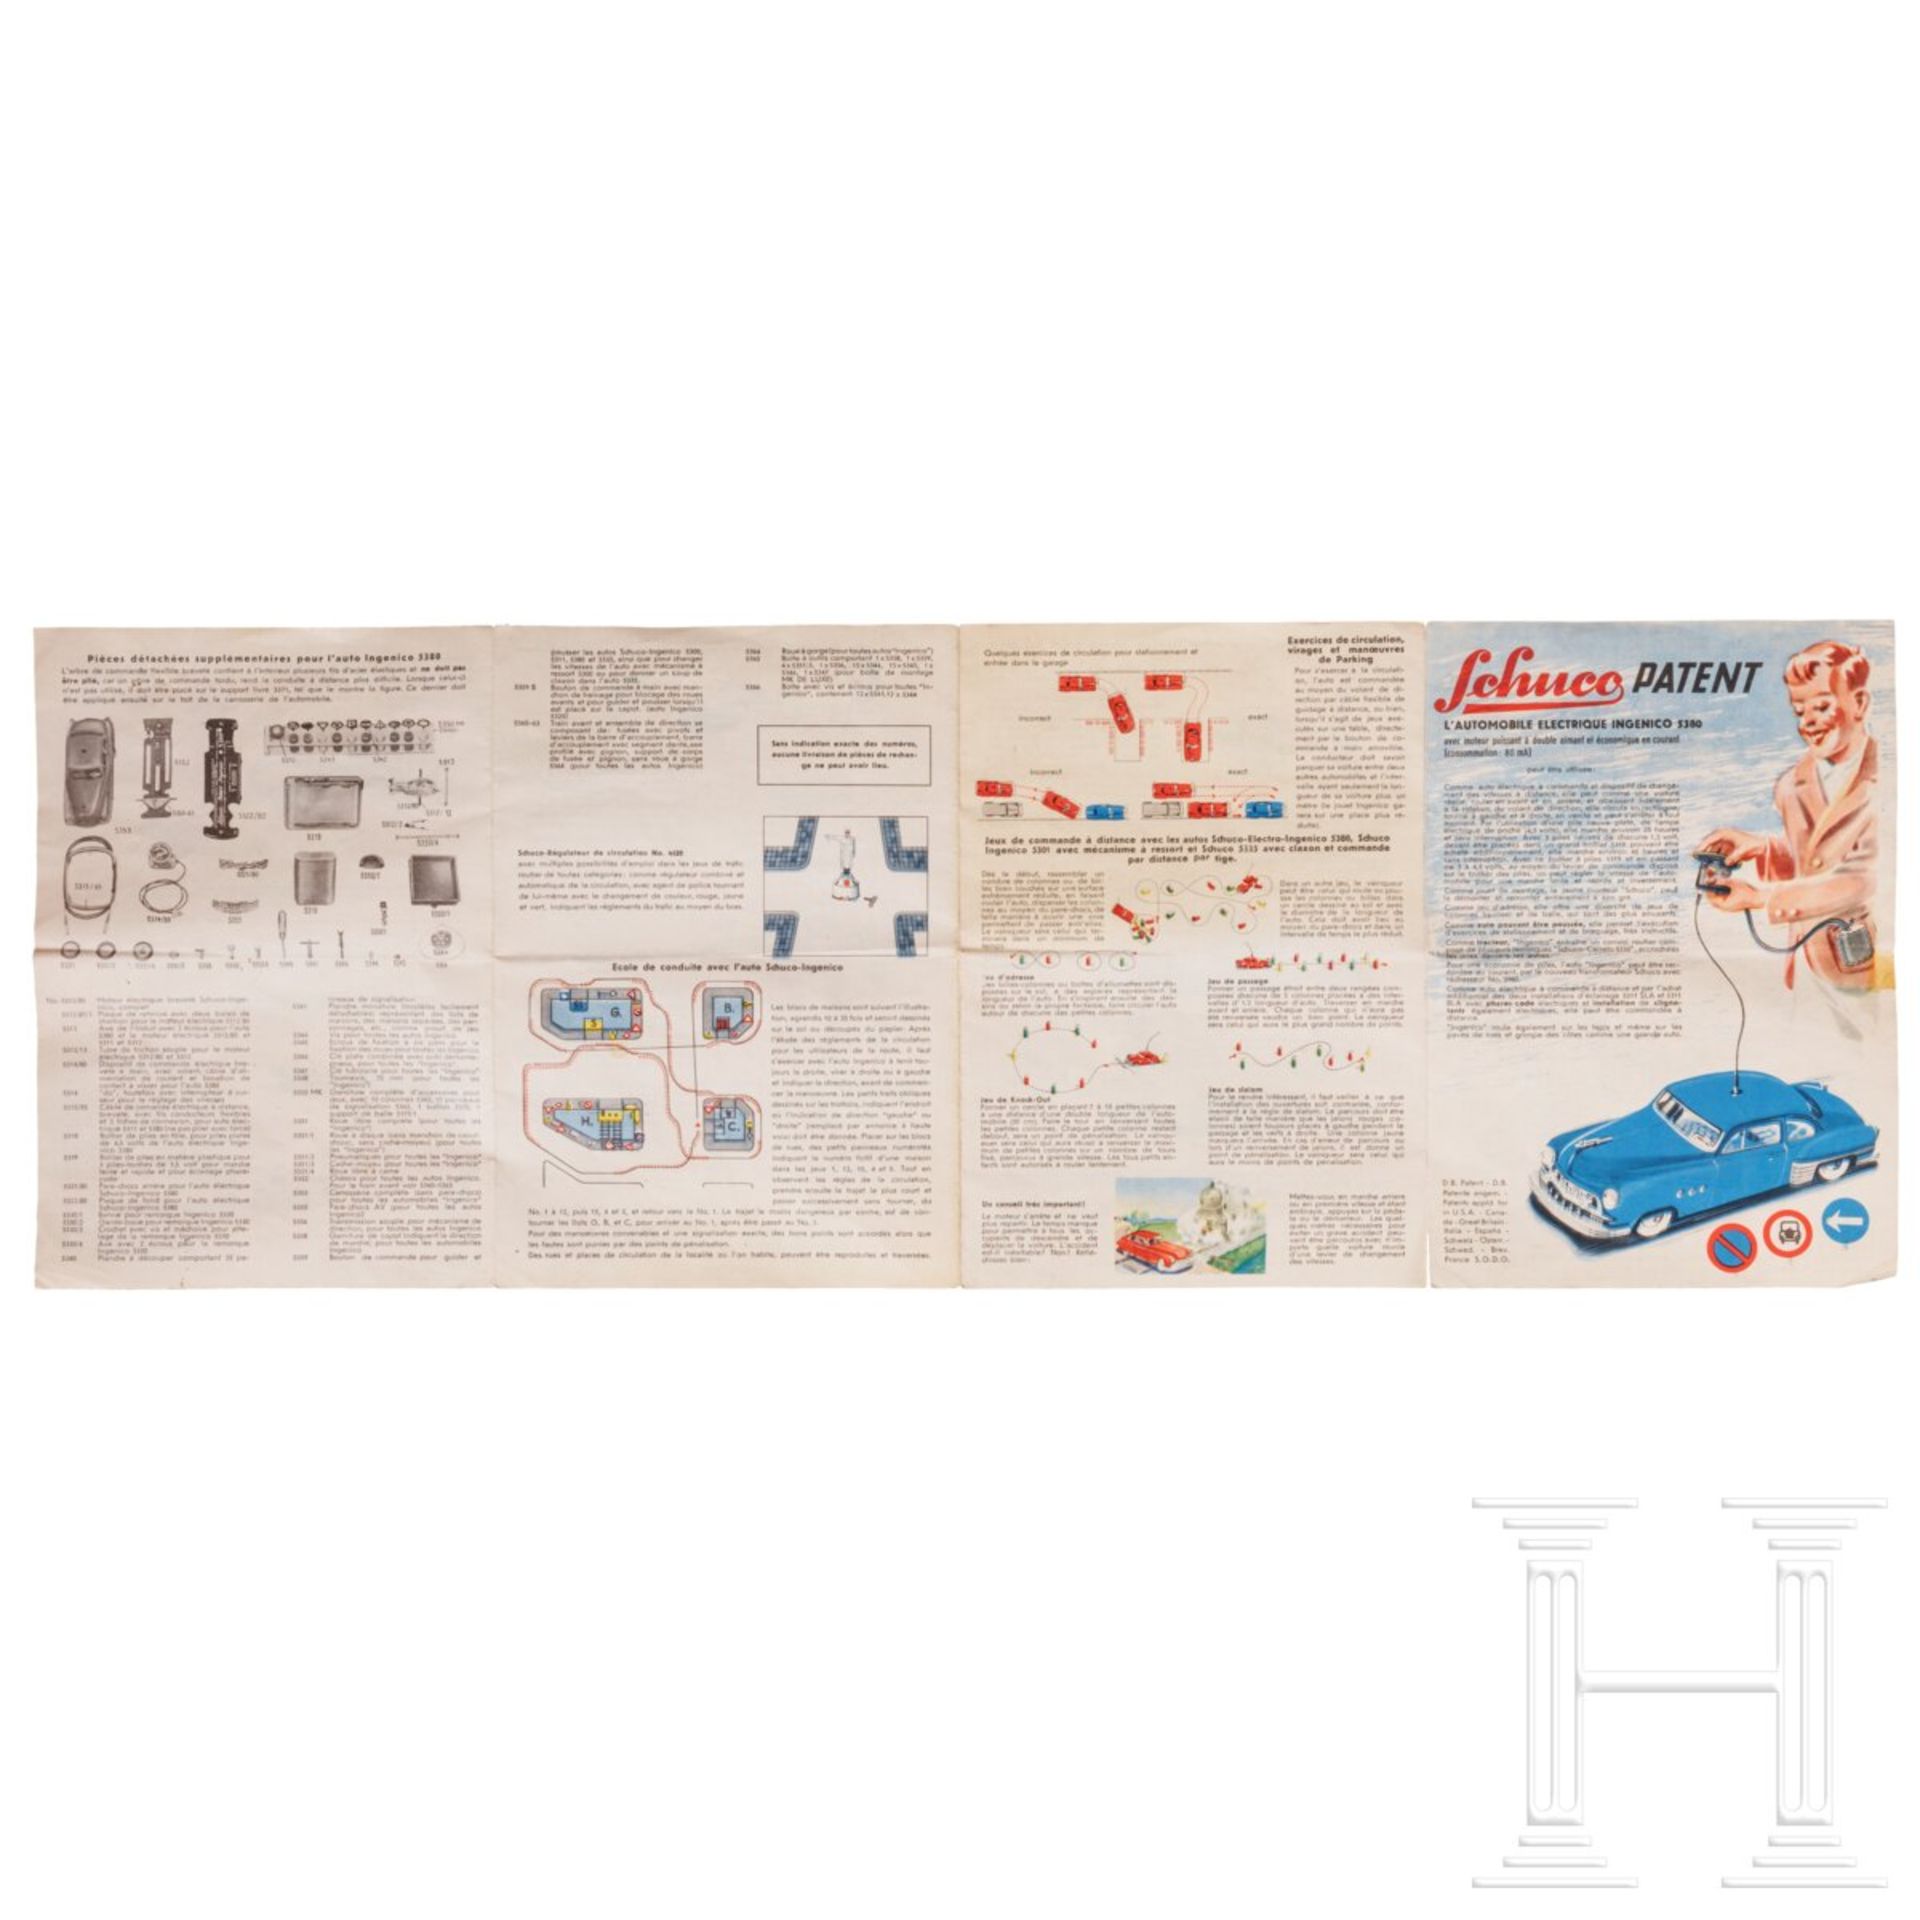 Schuco Ingenico, Patent Electro 5311/56 MK De Luxe - Baukasten mit Limousine, komplett im Originalka - Image 6 of 7